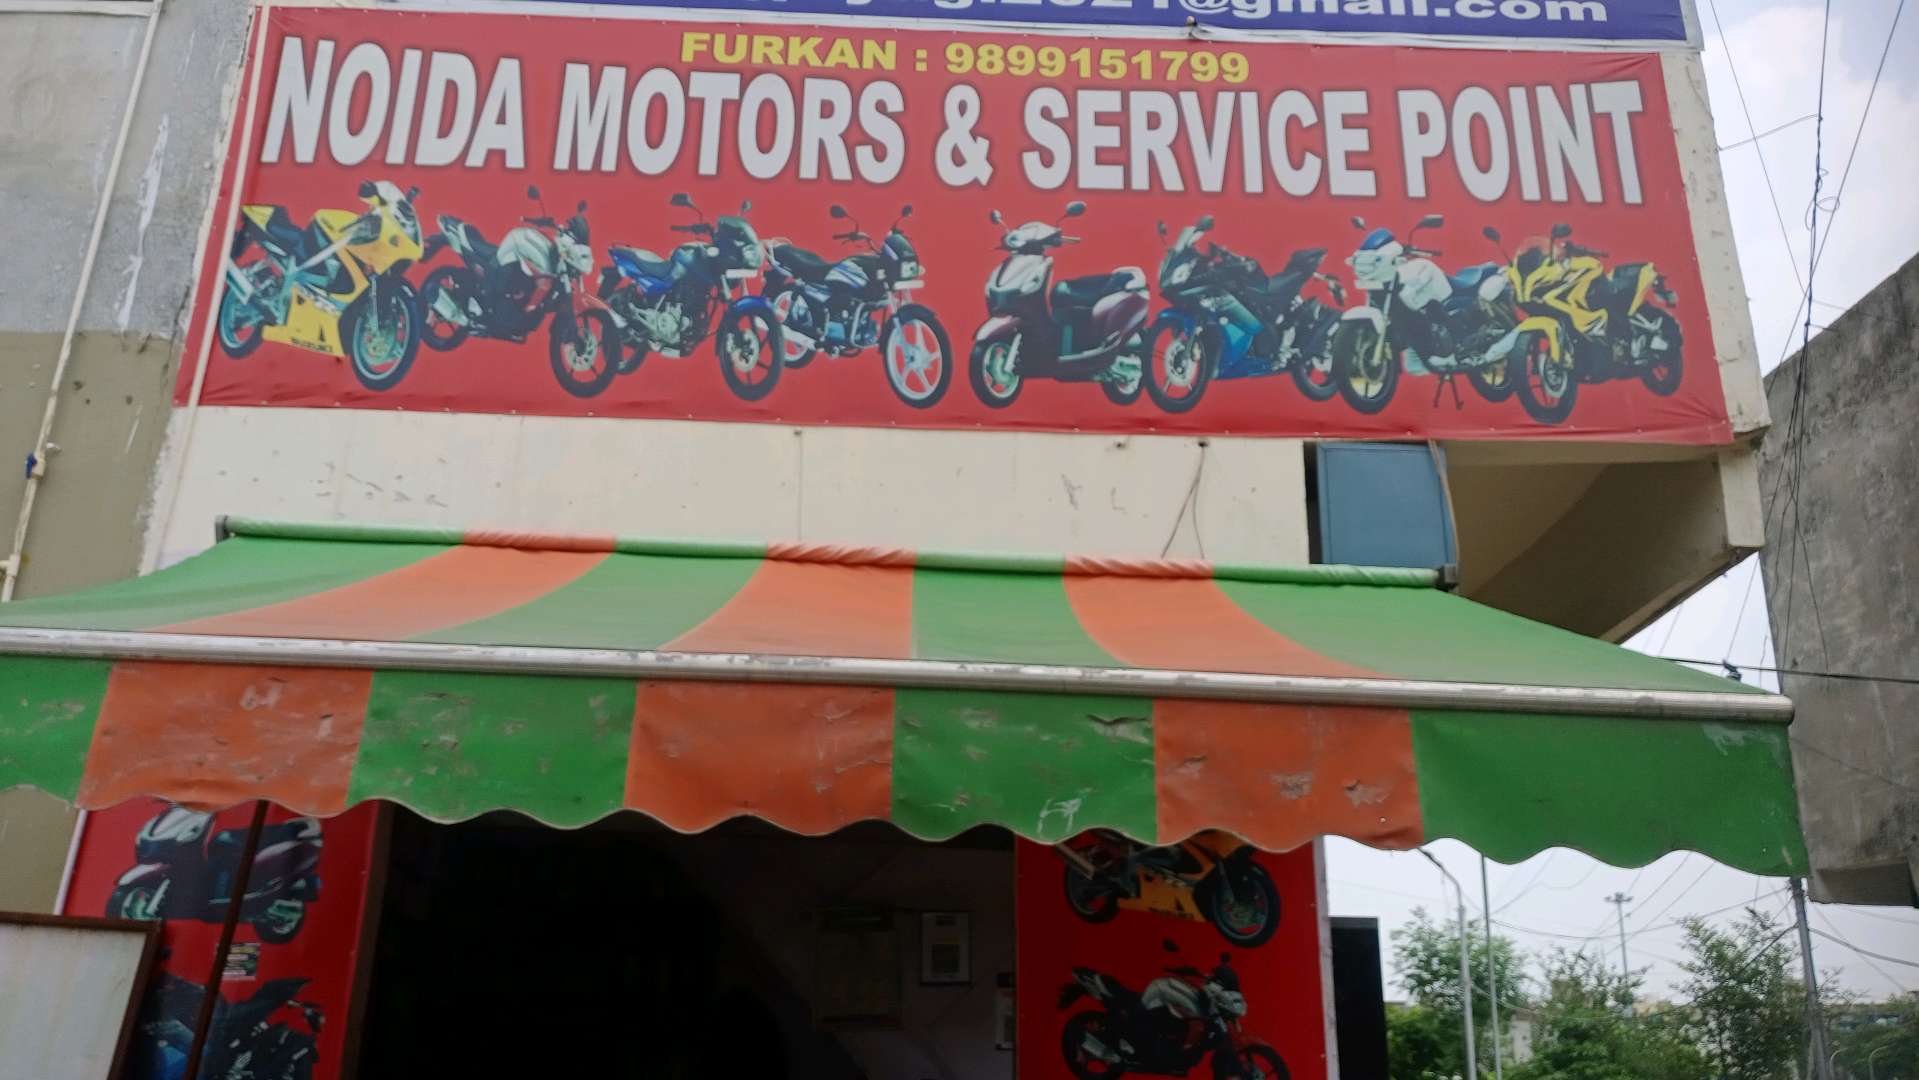 Noida Motors & Service Point